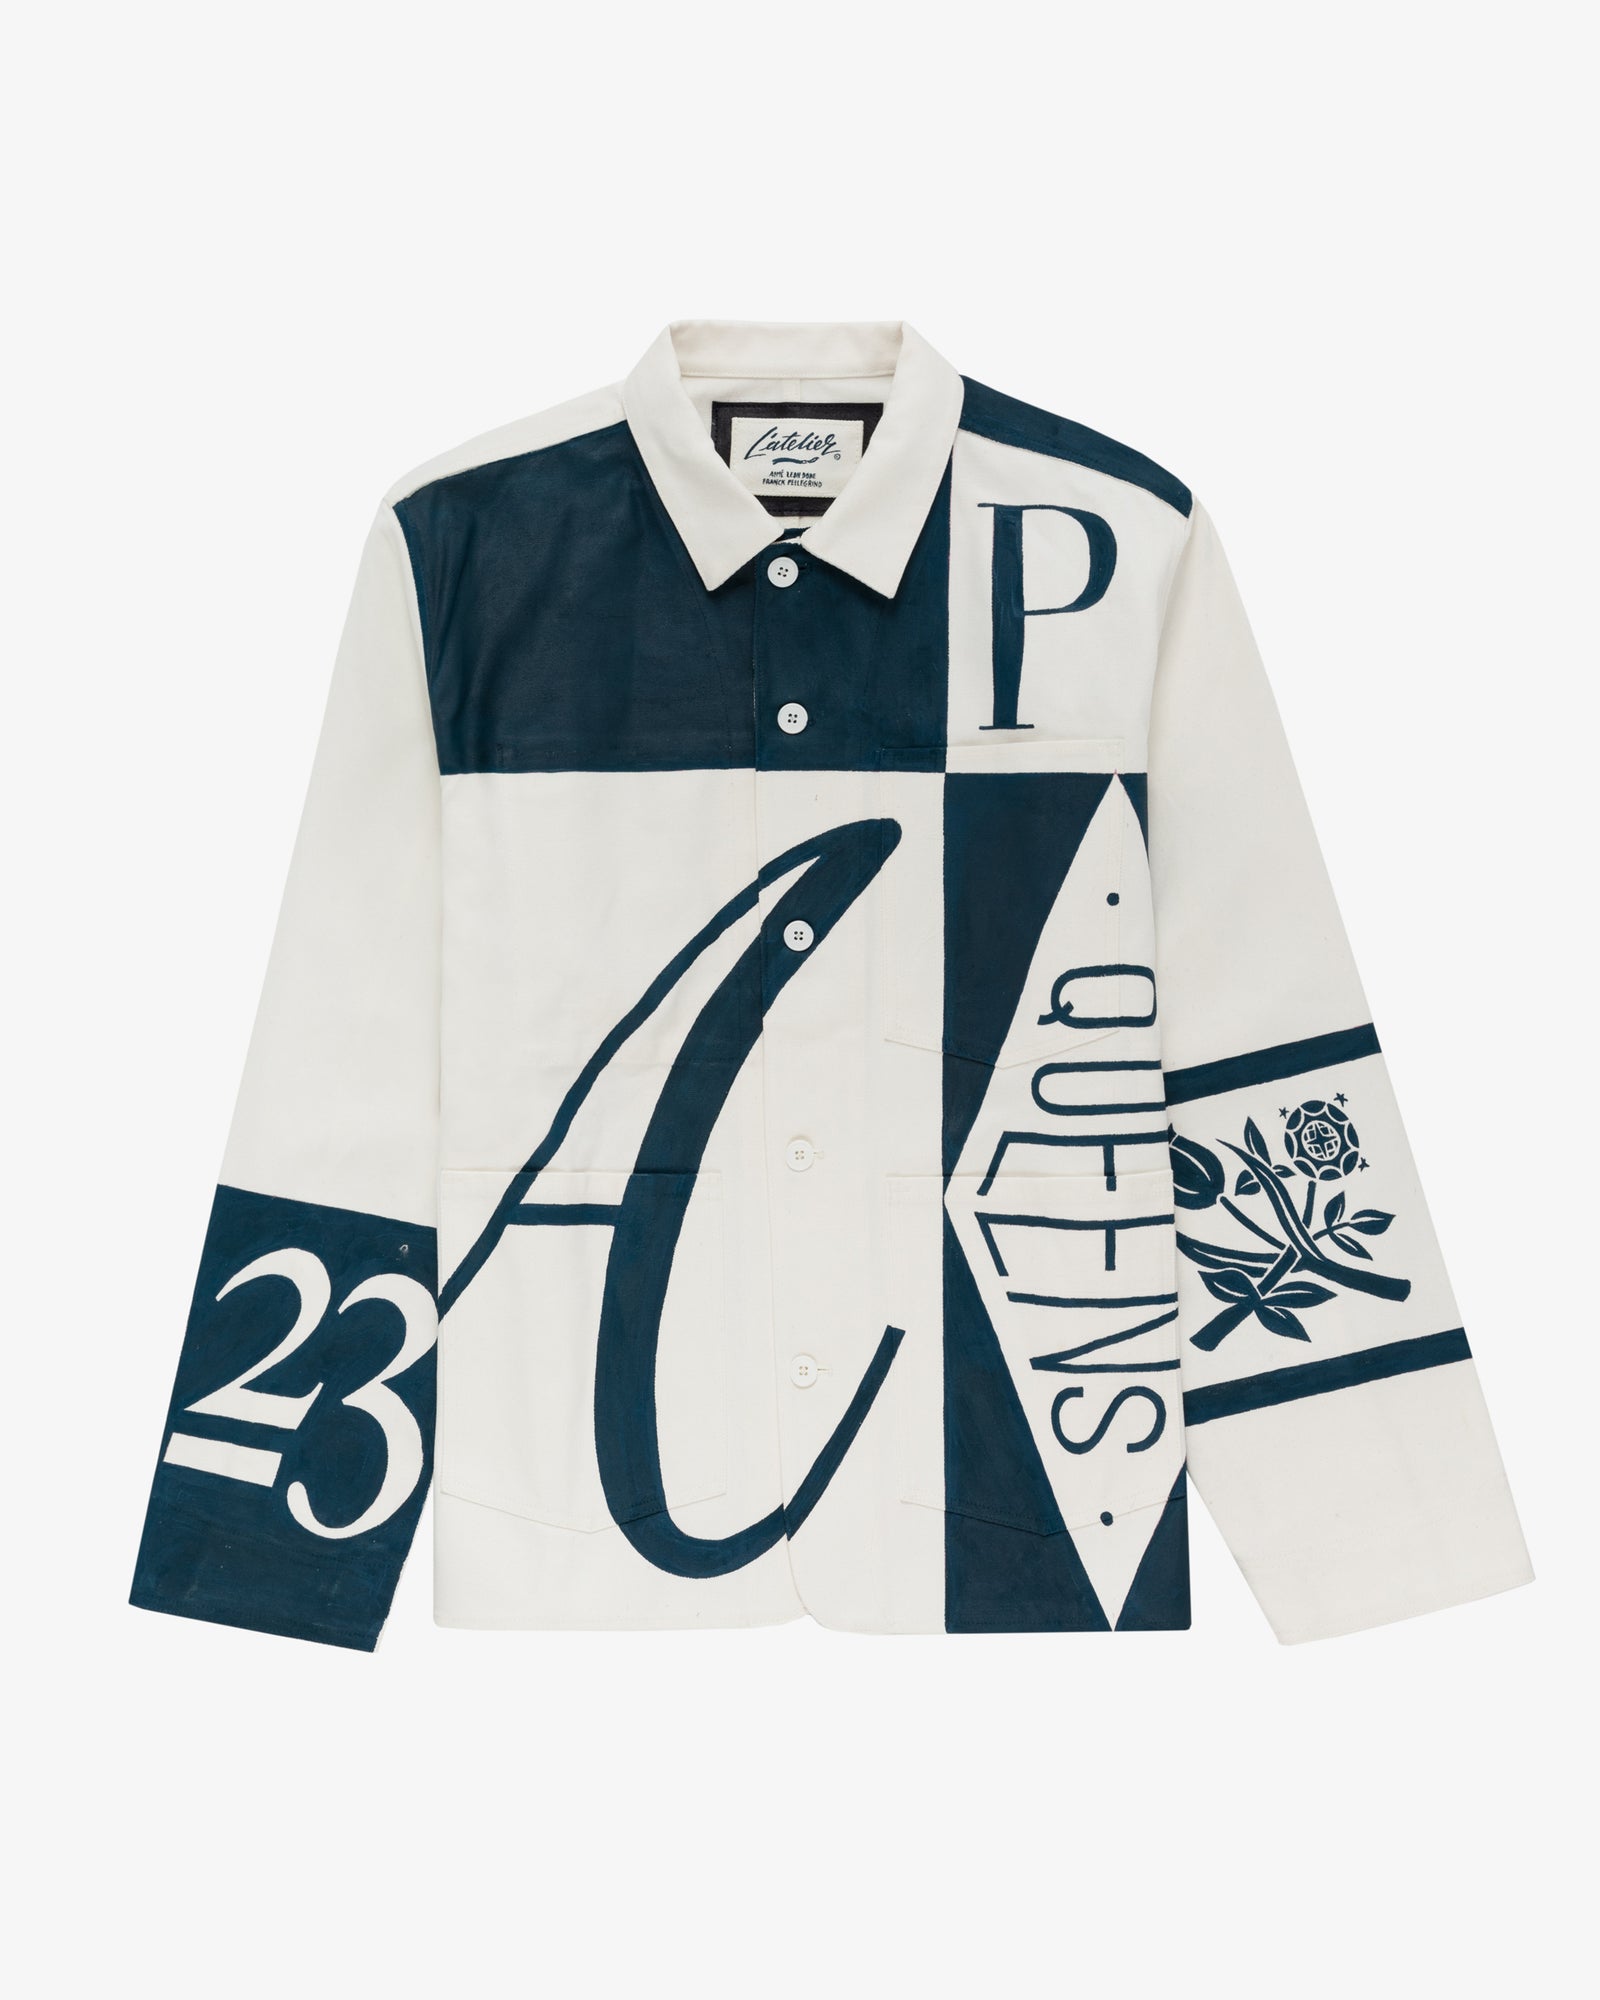 ALD / Franck Pellegrino Colorblock Chore Jacket